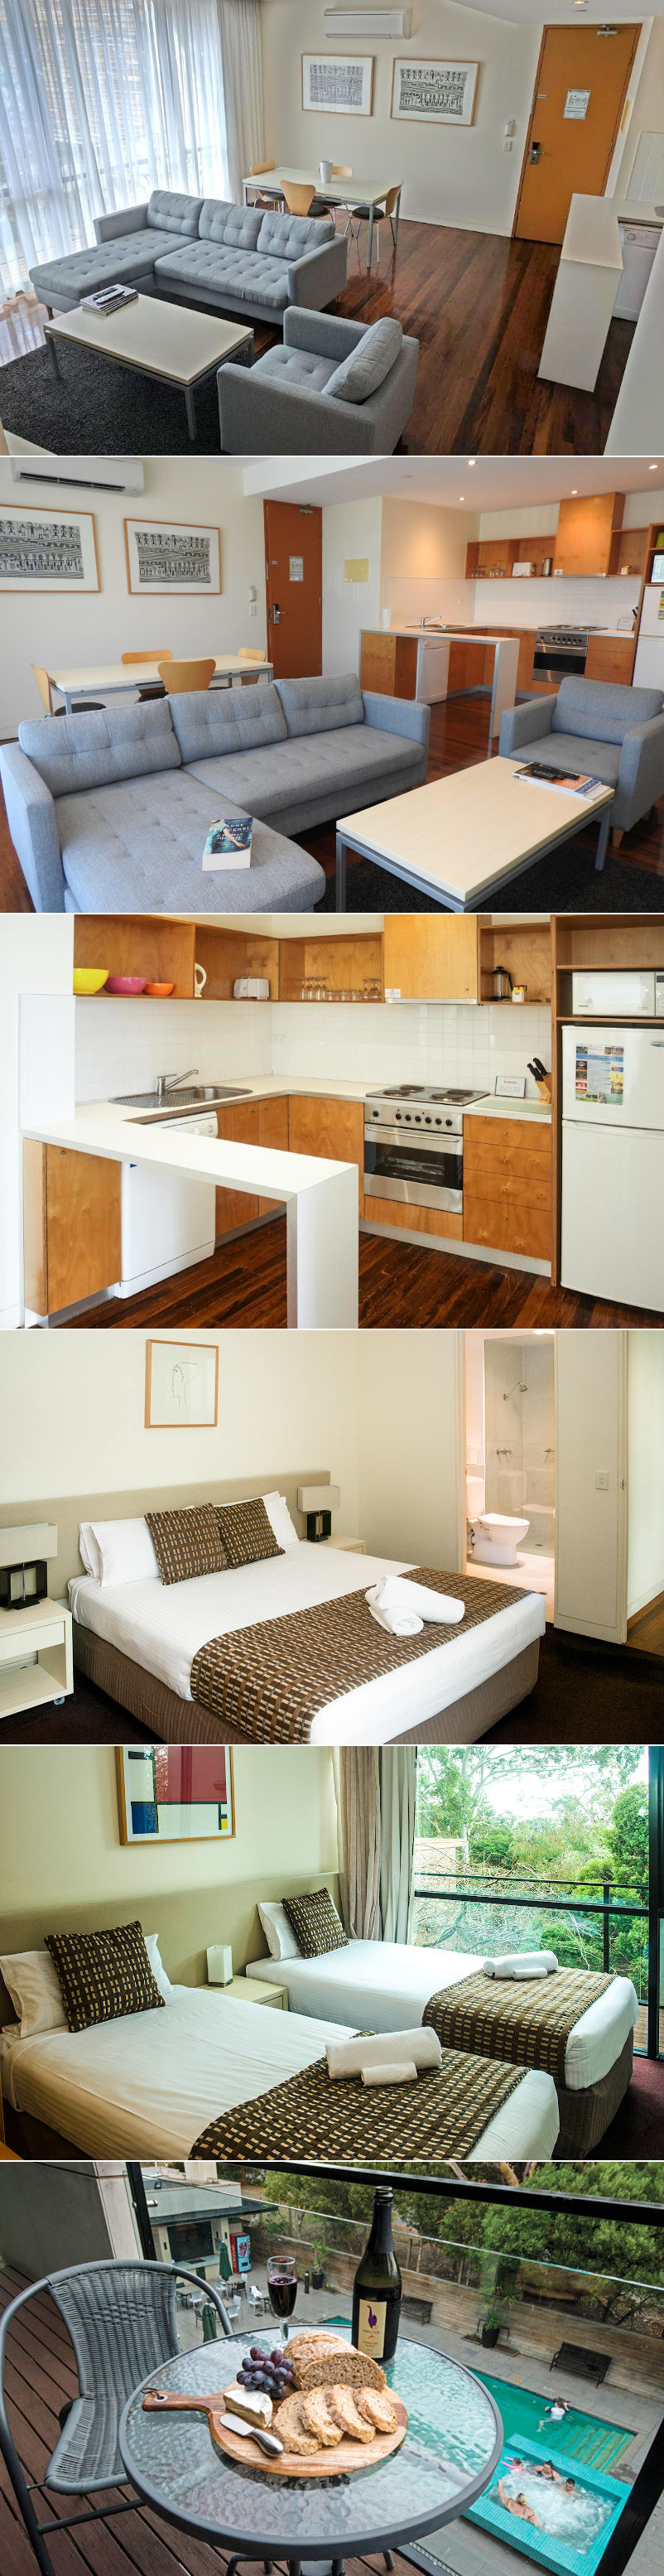 Phillip Island Apartments - Apartments